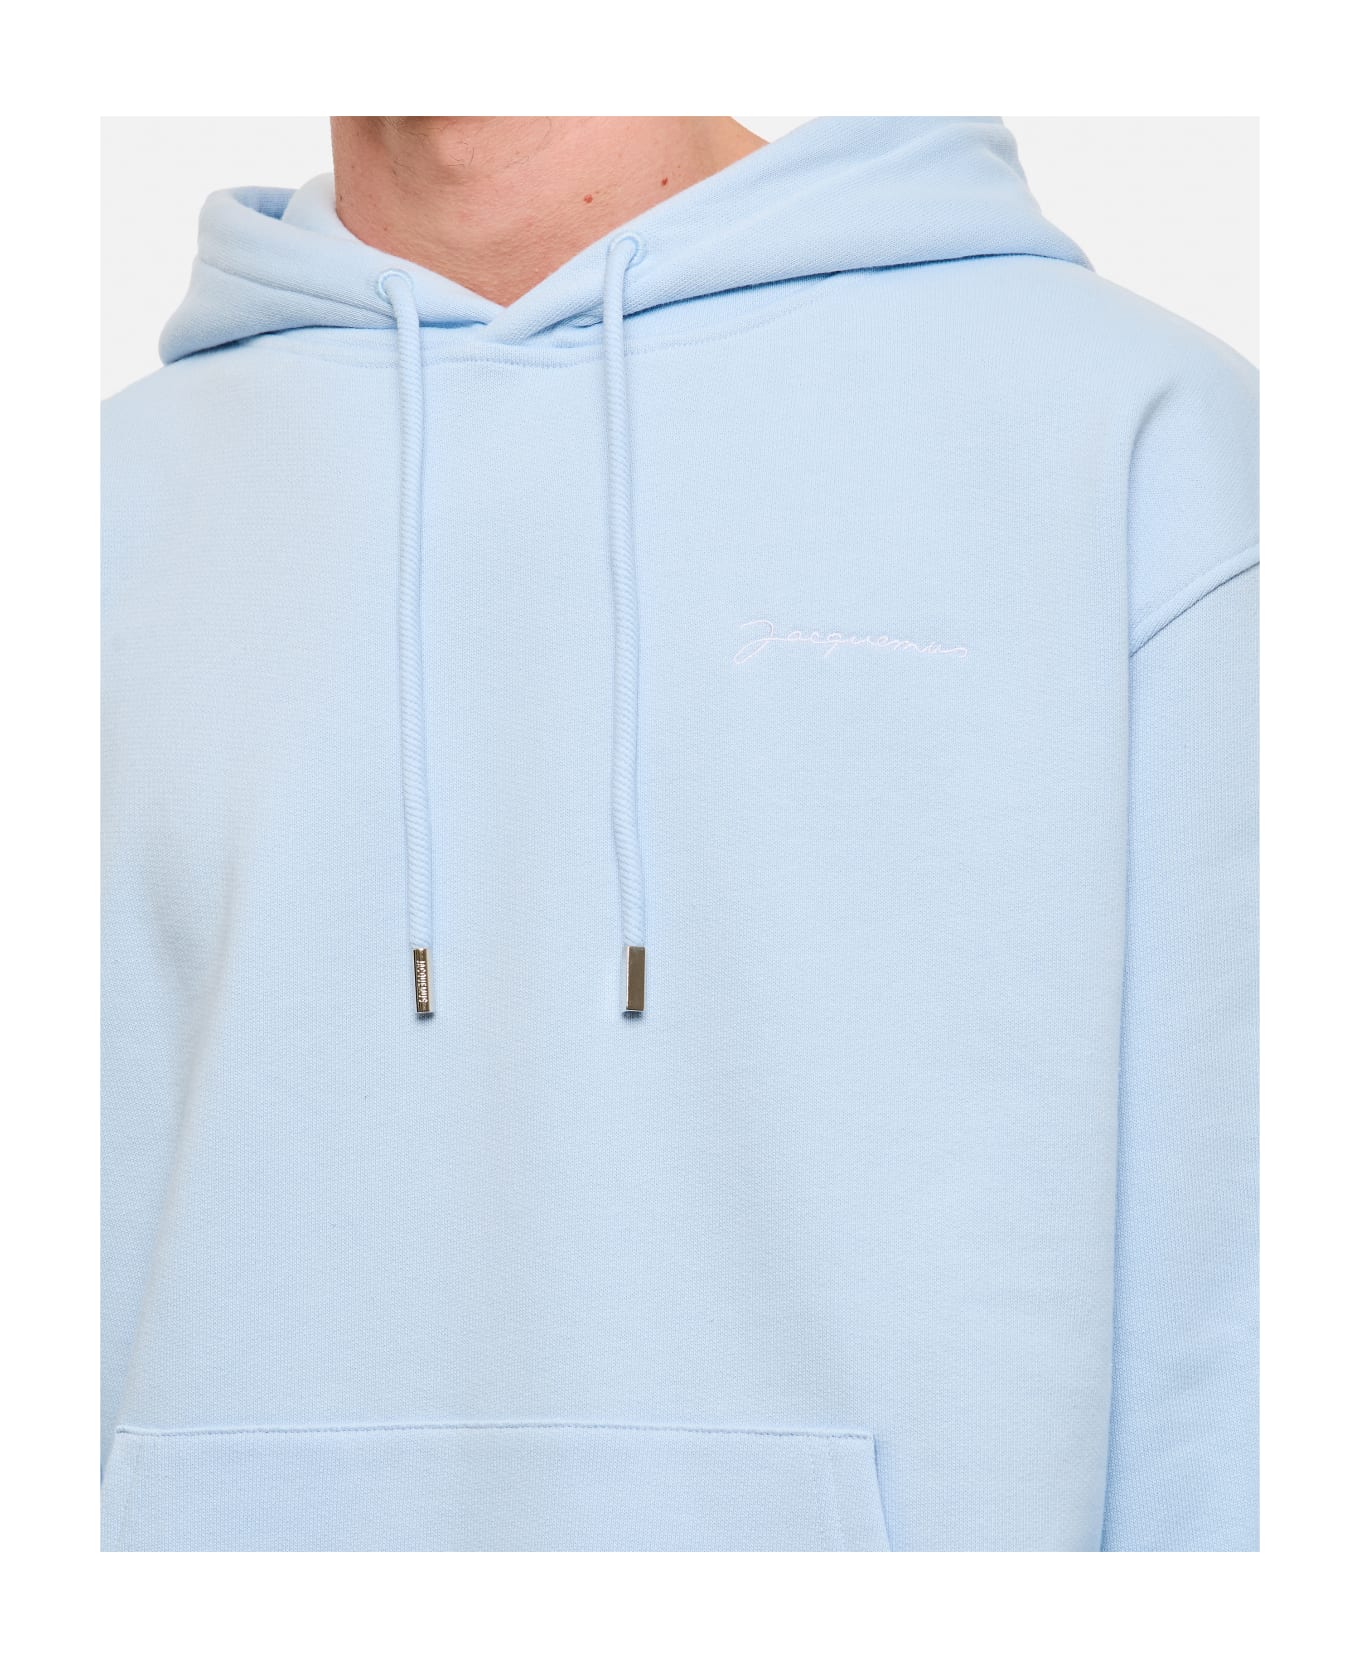 Jacquemus Brode Cotton Sweatshirt - Light blue 2 name:475